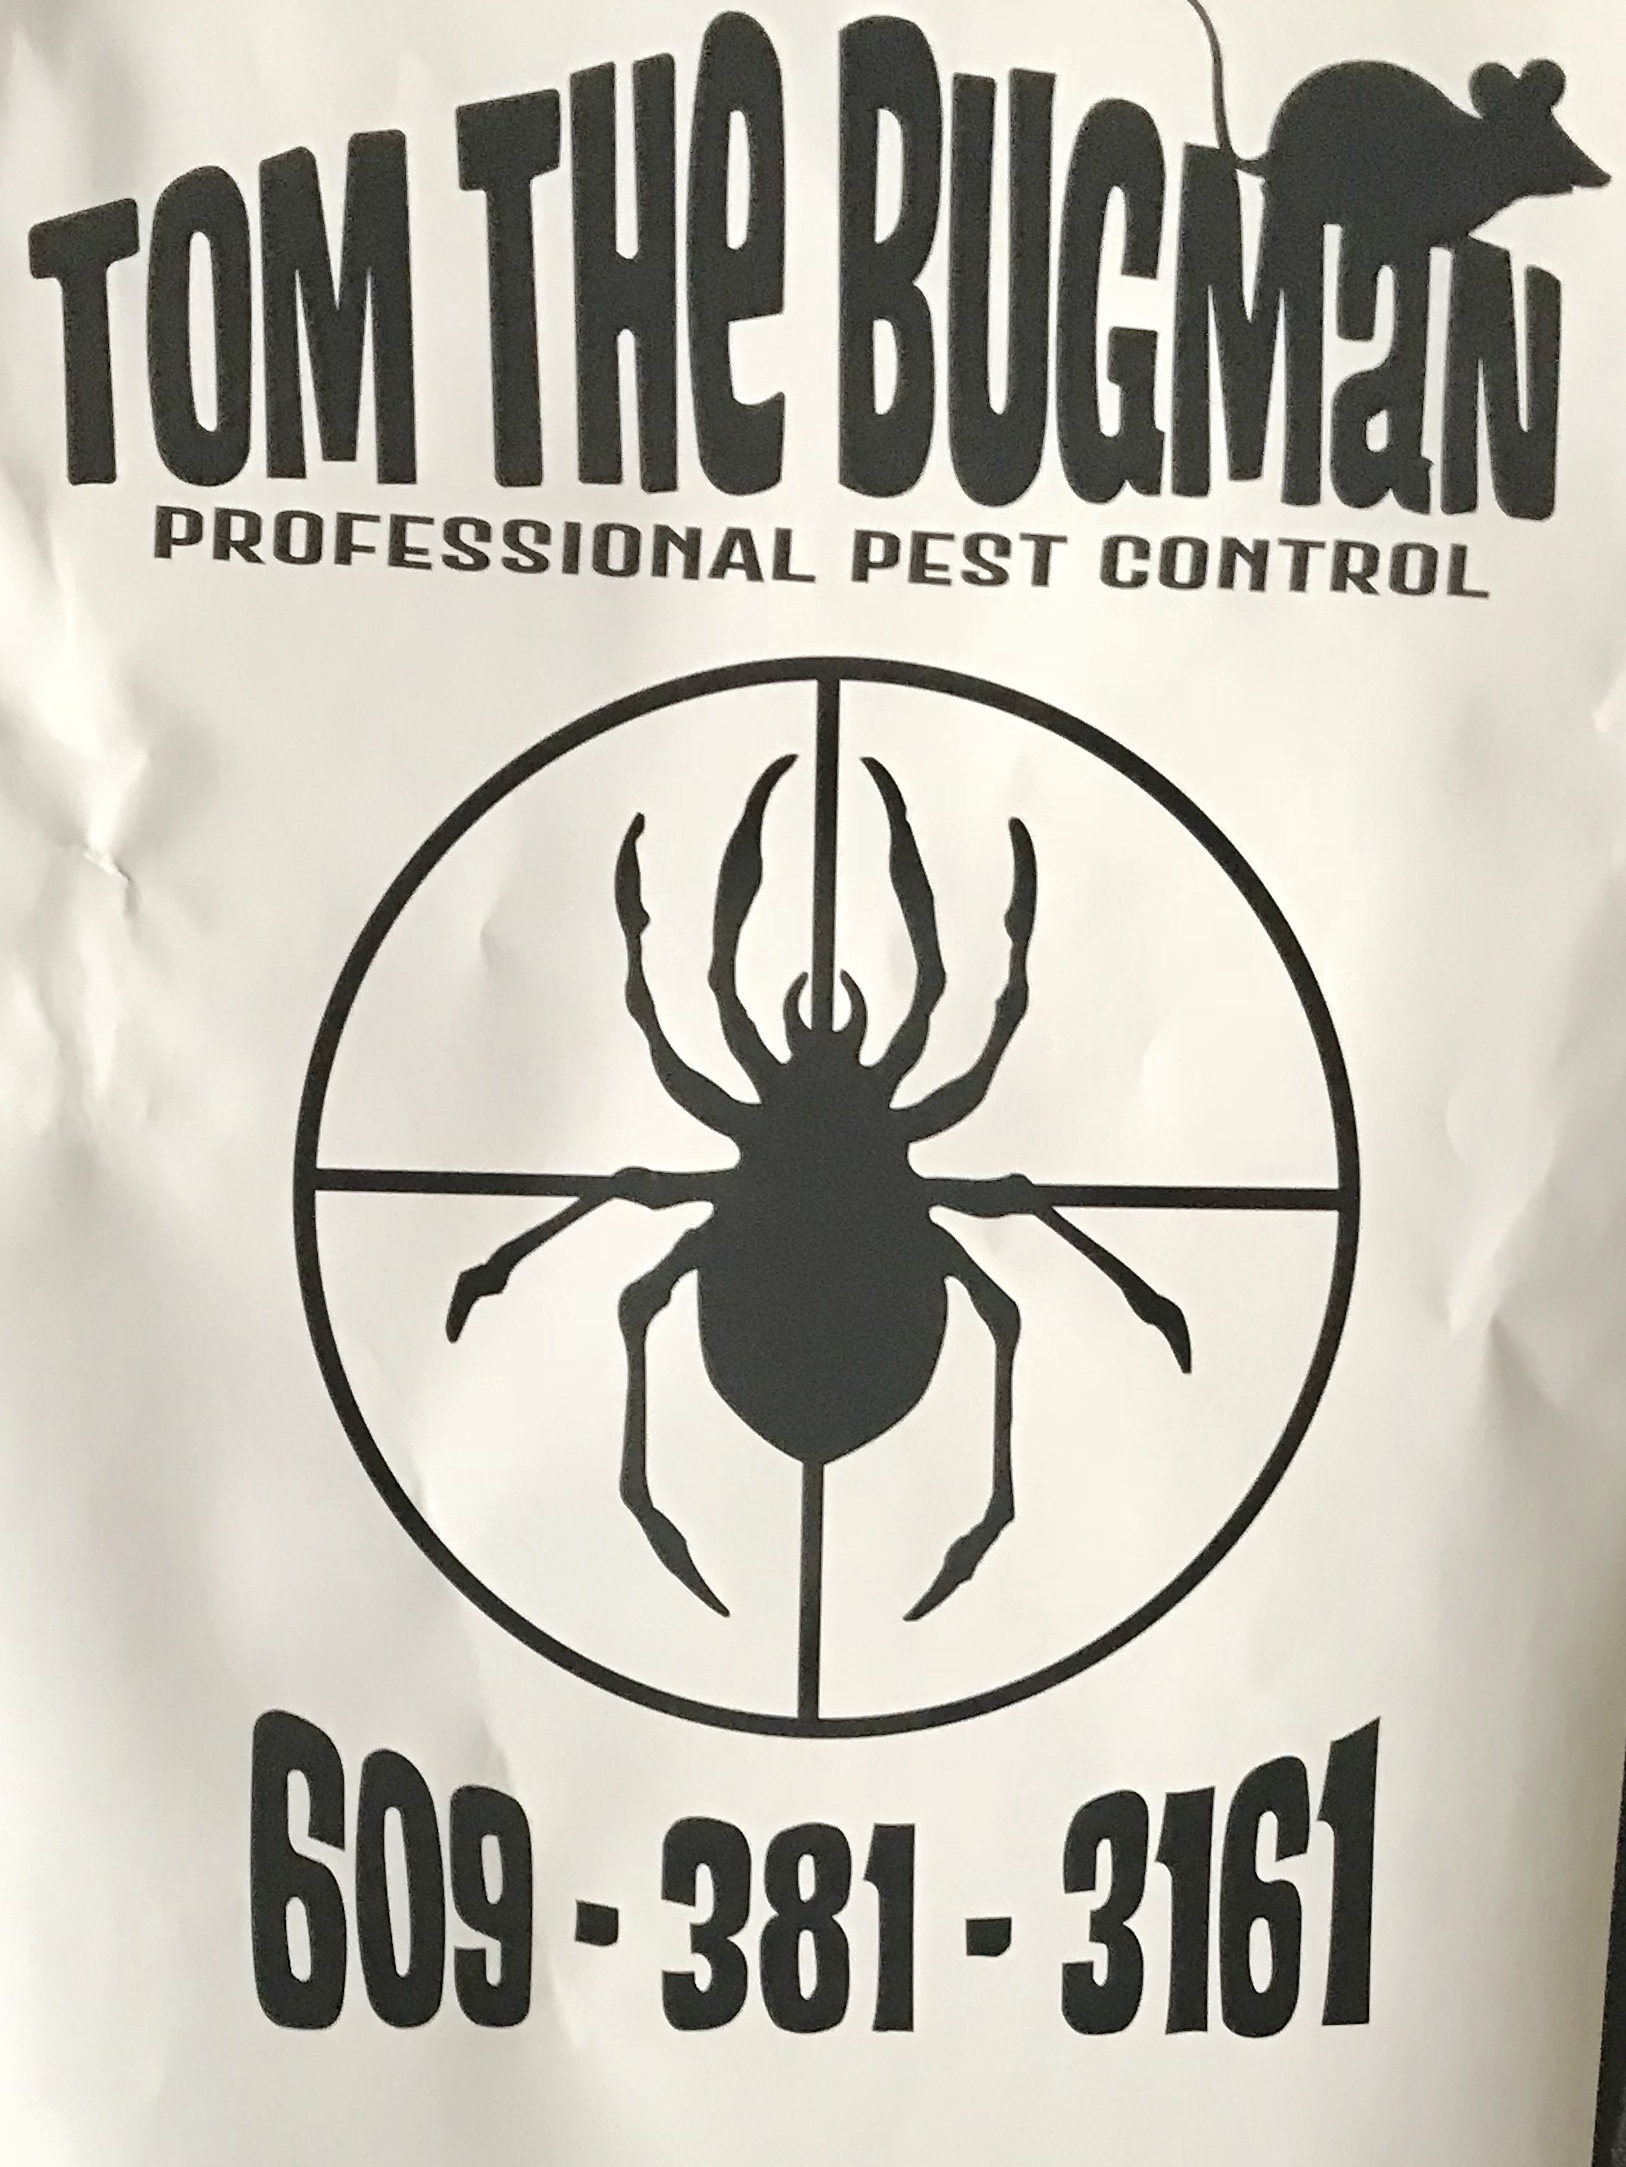 Tom the Bugman Logo